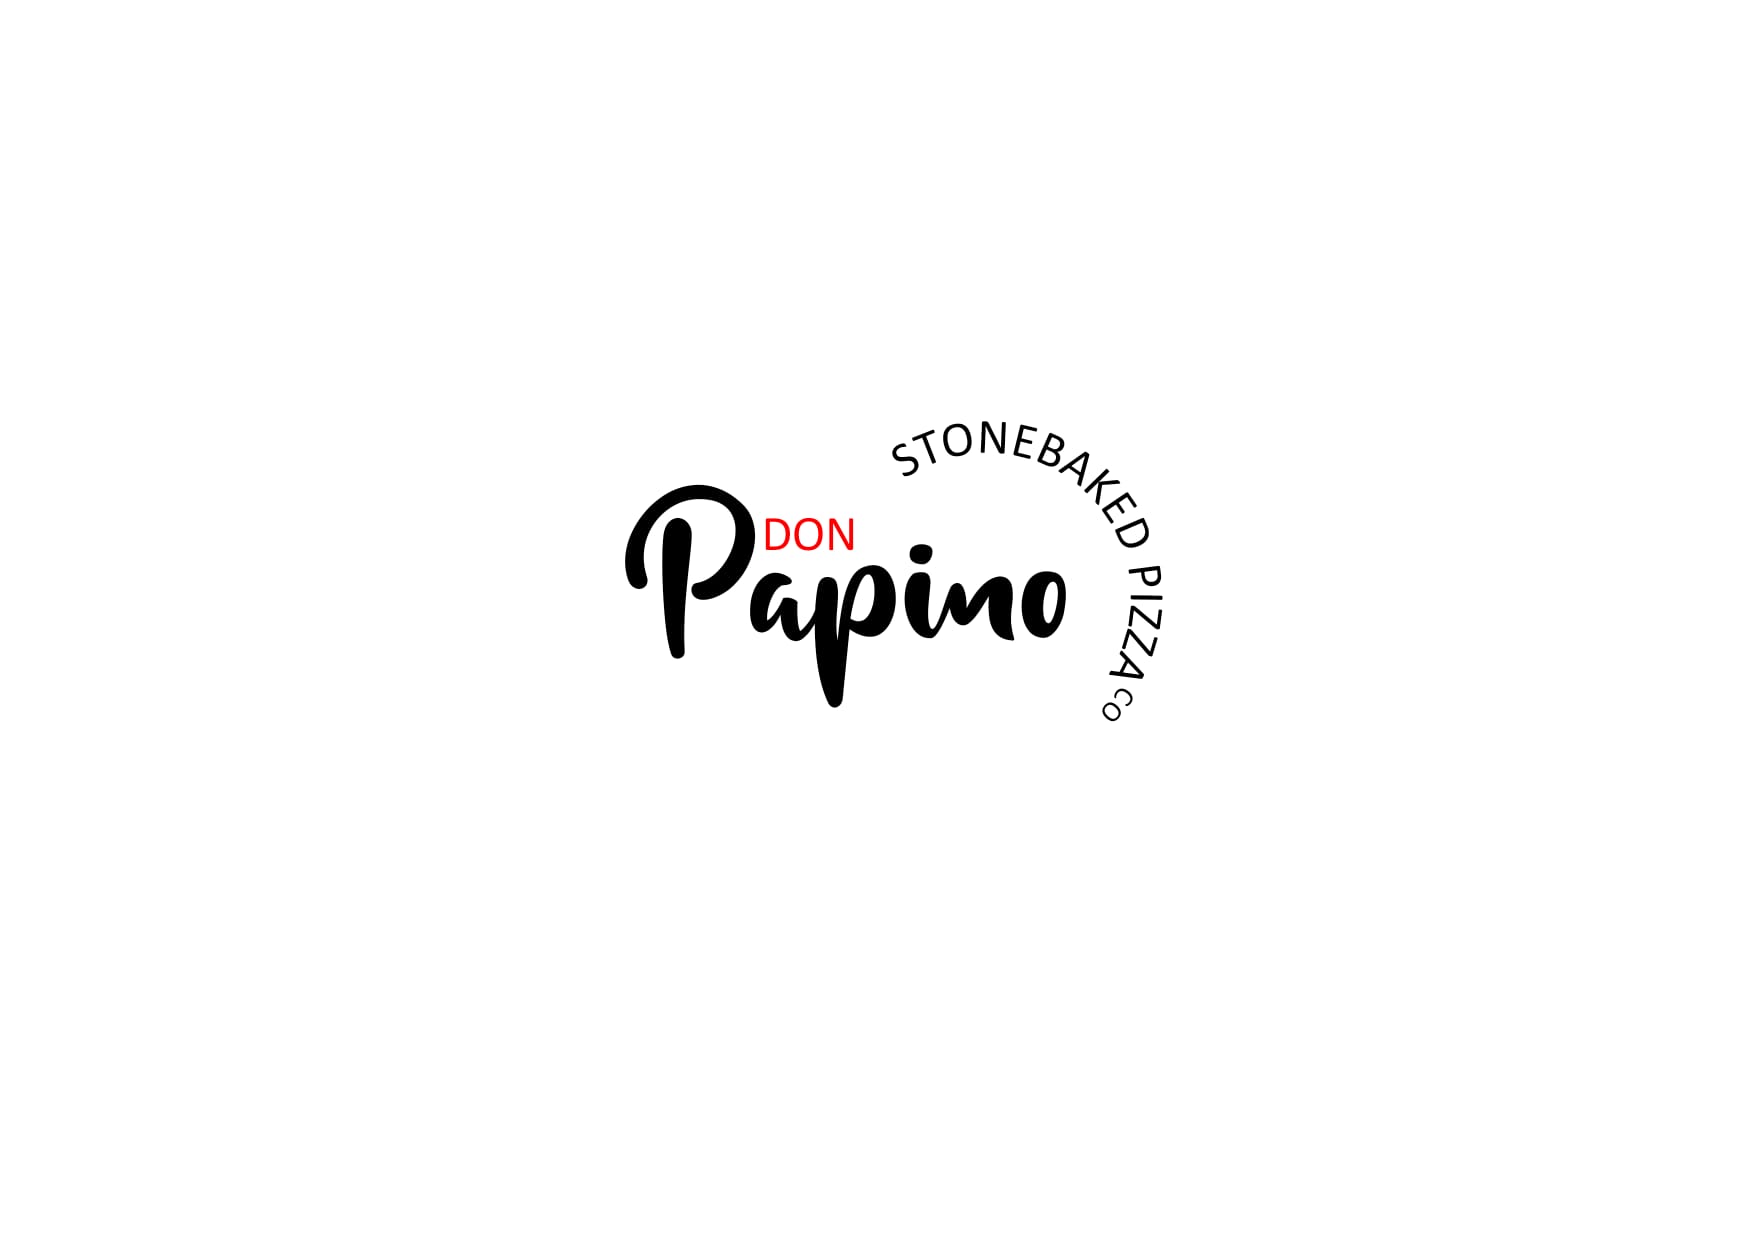 Don Papino Stone Baked Pizza